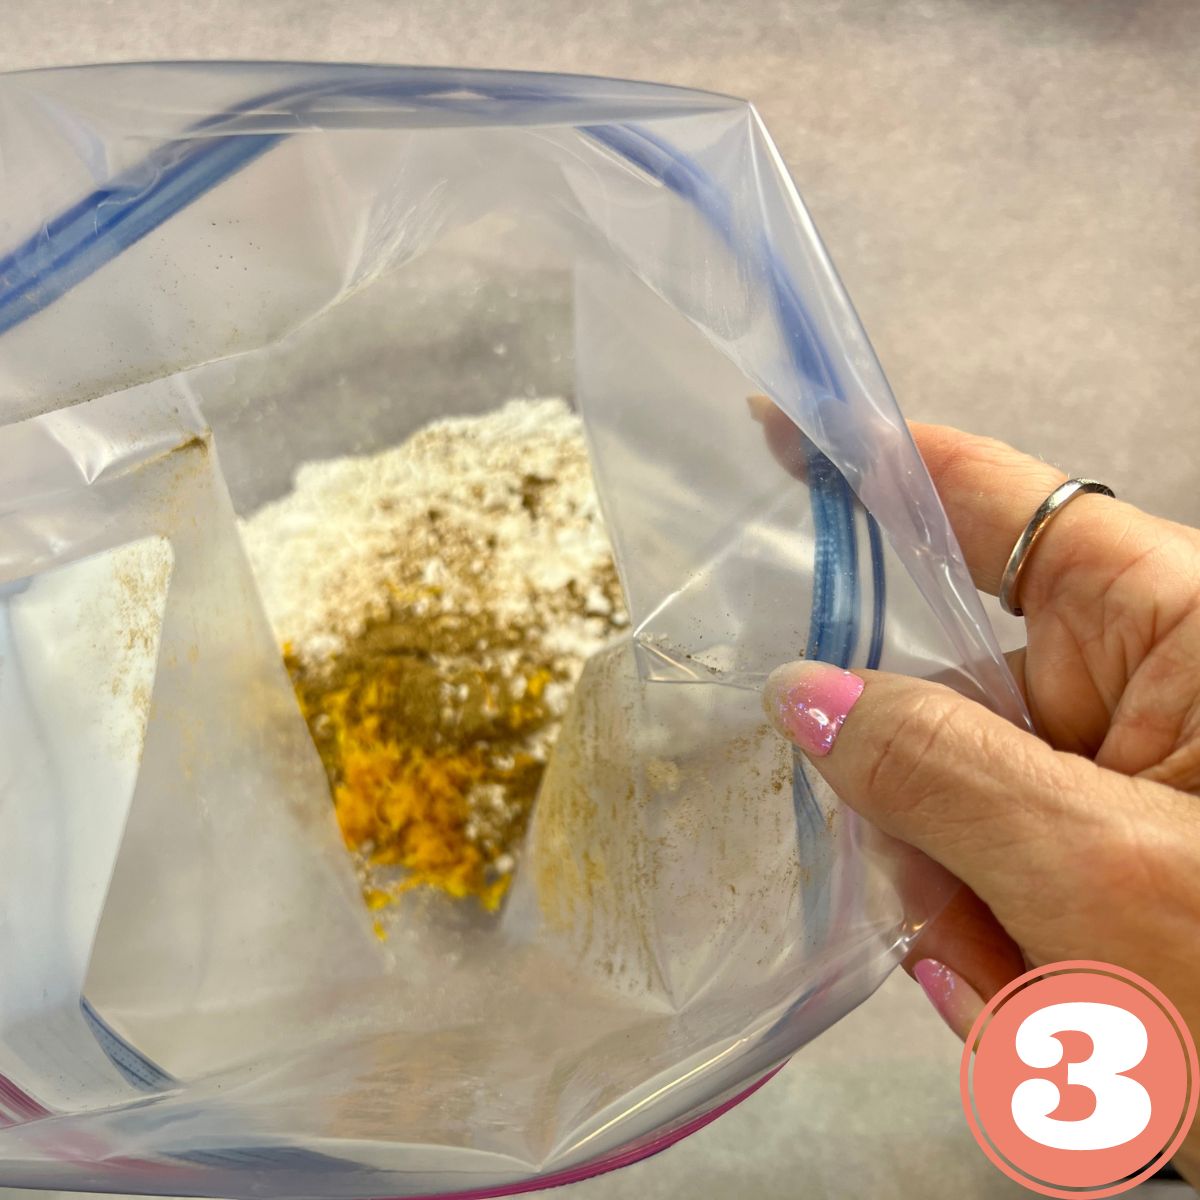 Powdered sugar, cinnamon and orange zest in a ziplock baggie